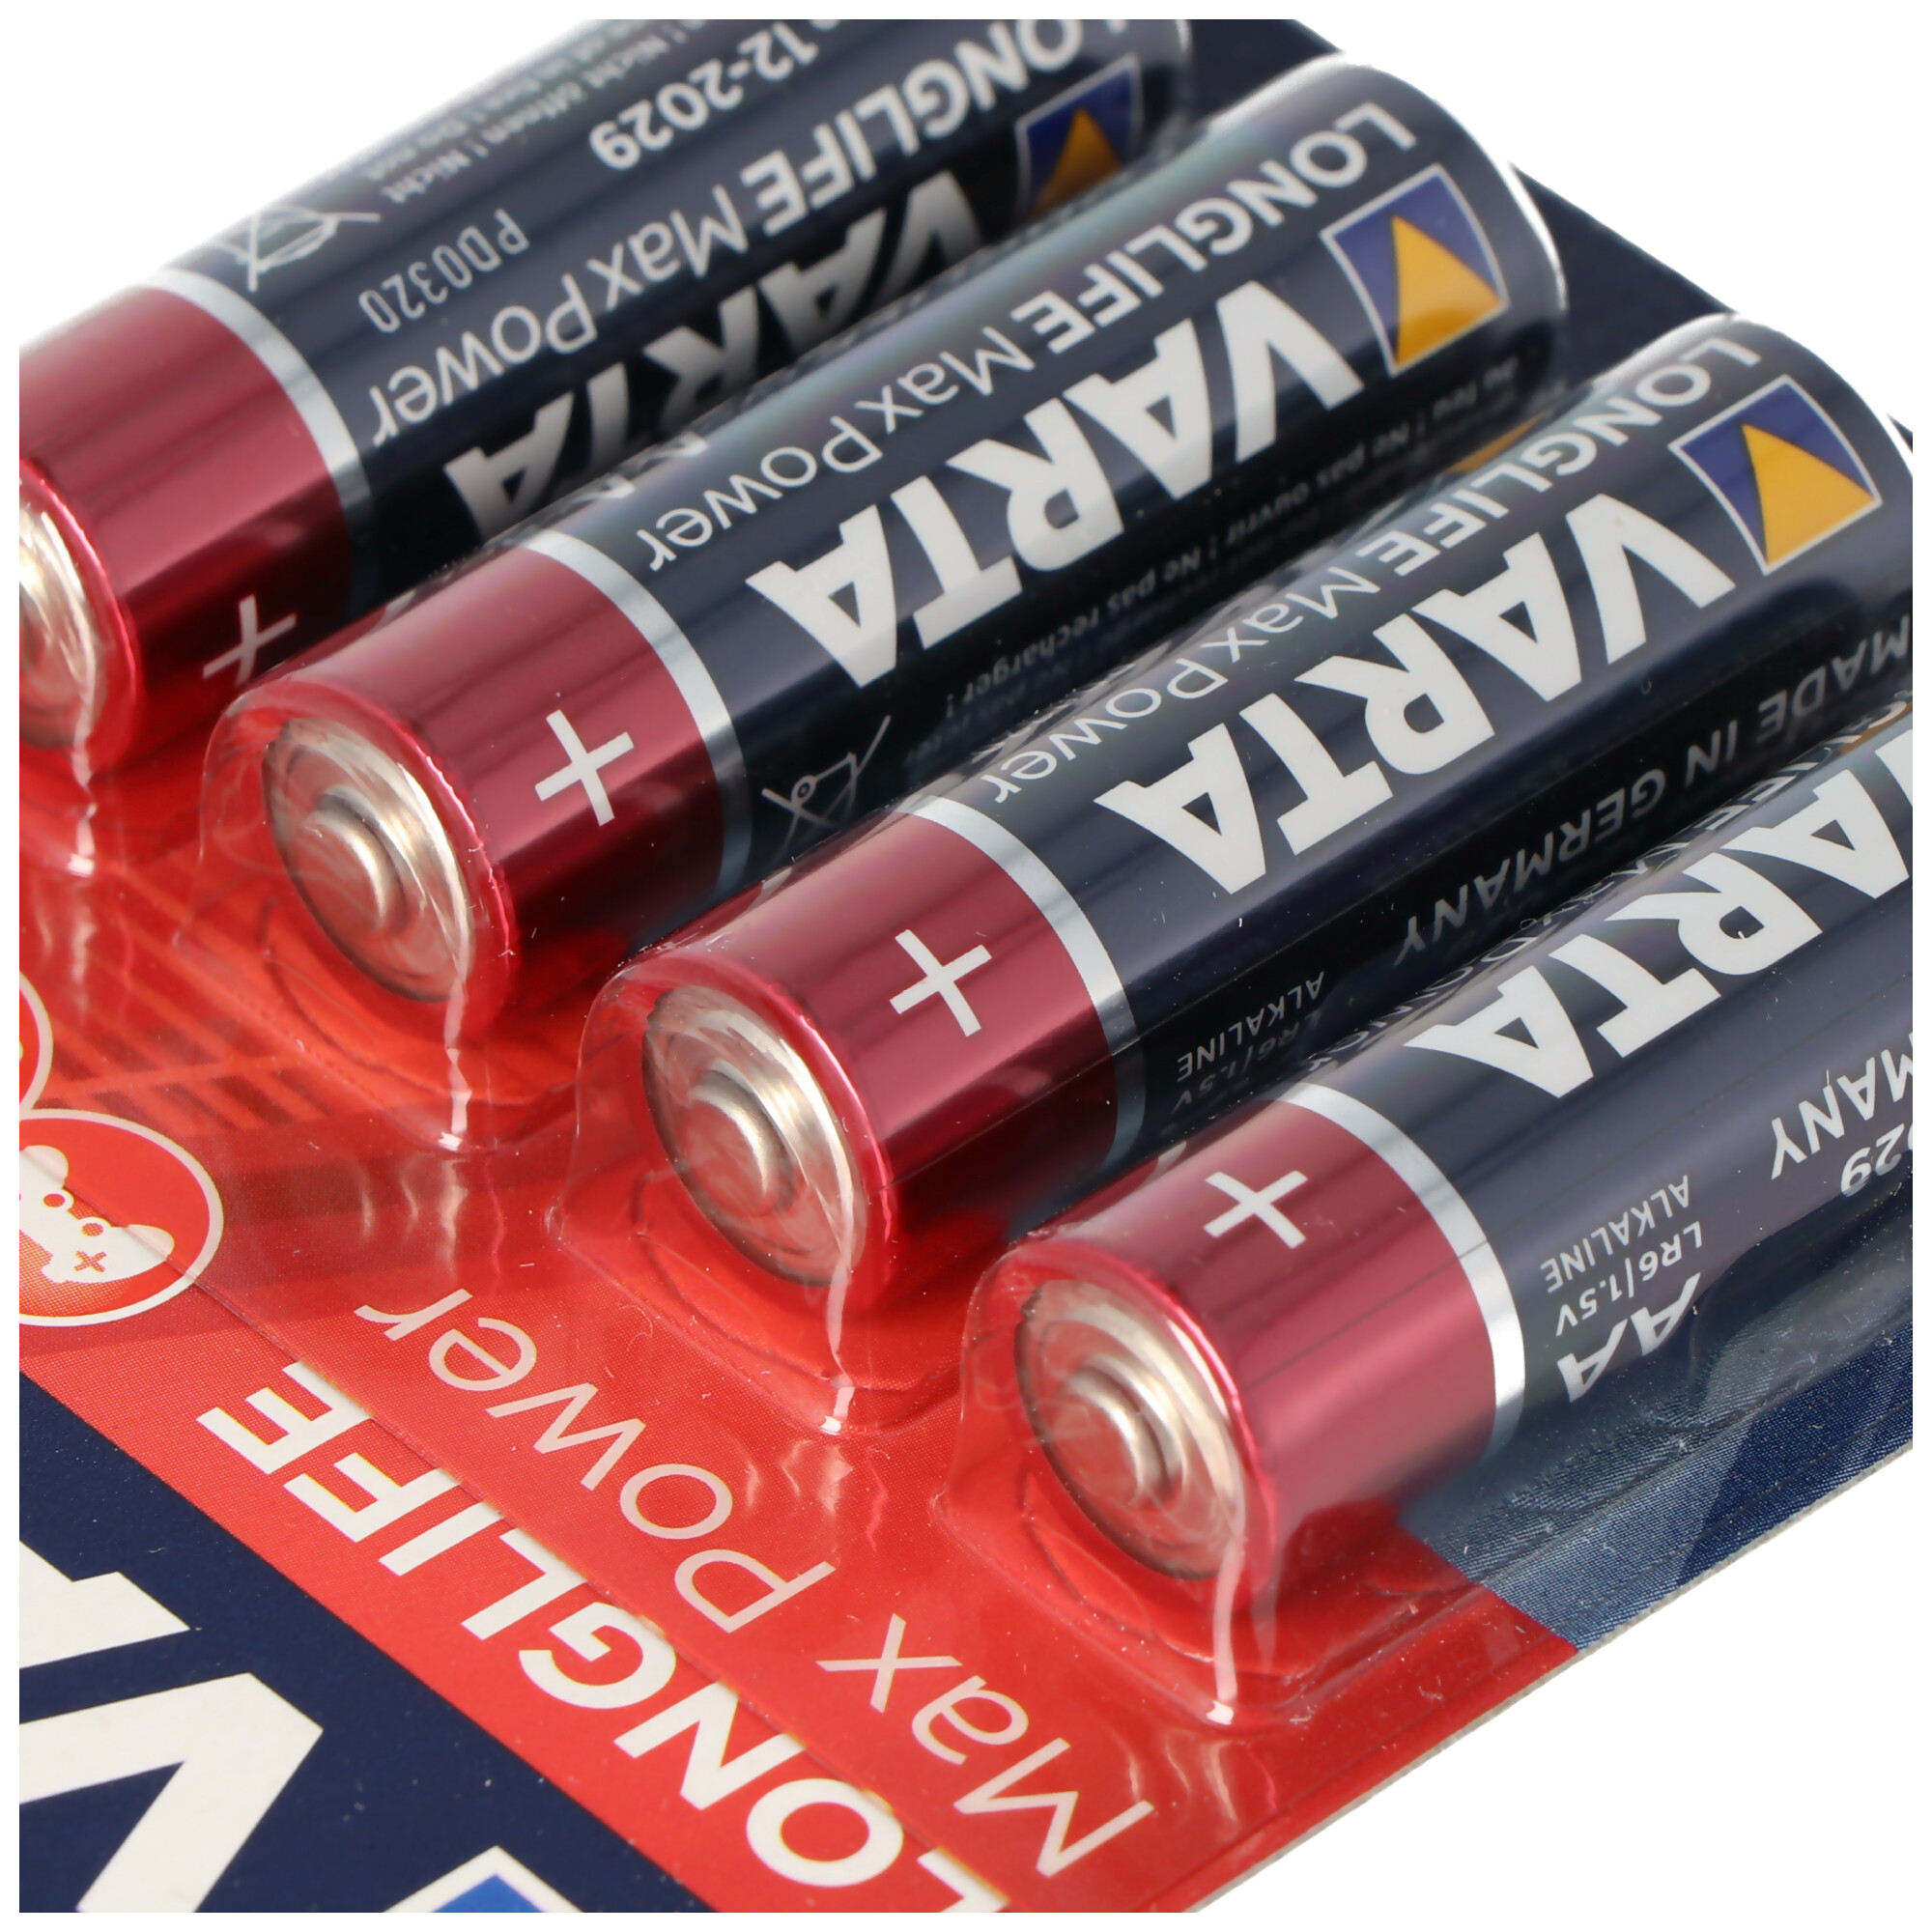 Varta Longlife Max Power (ehem. Max-Tech) 4706 Mignon AA Batterie 4-er Blister